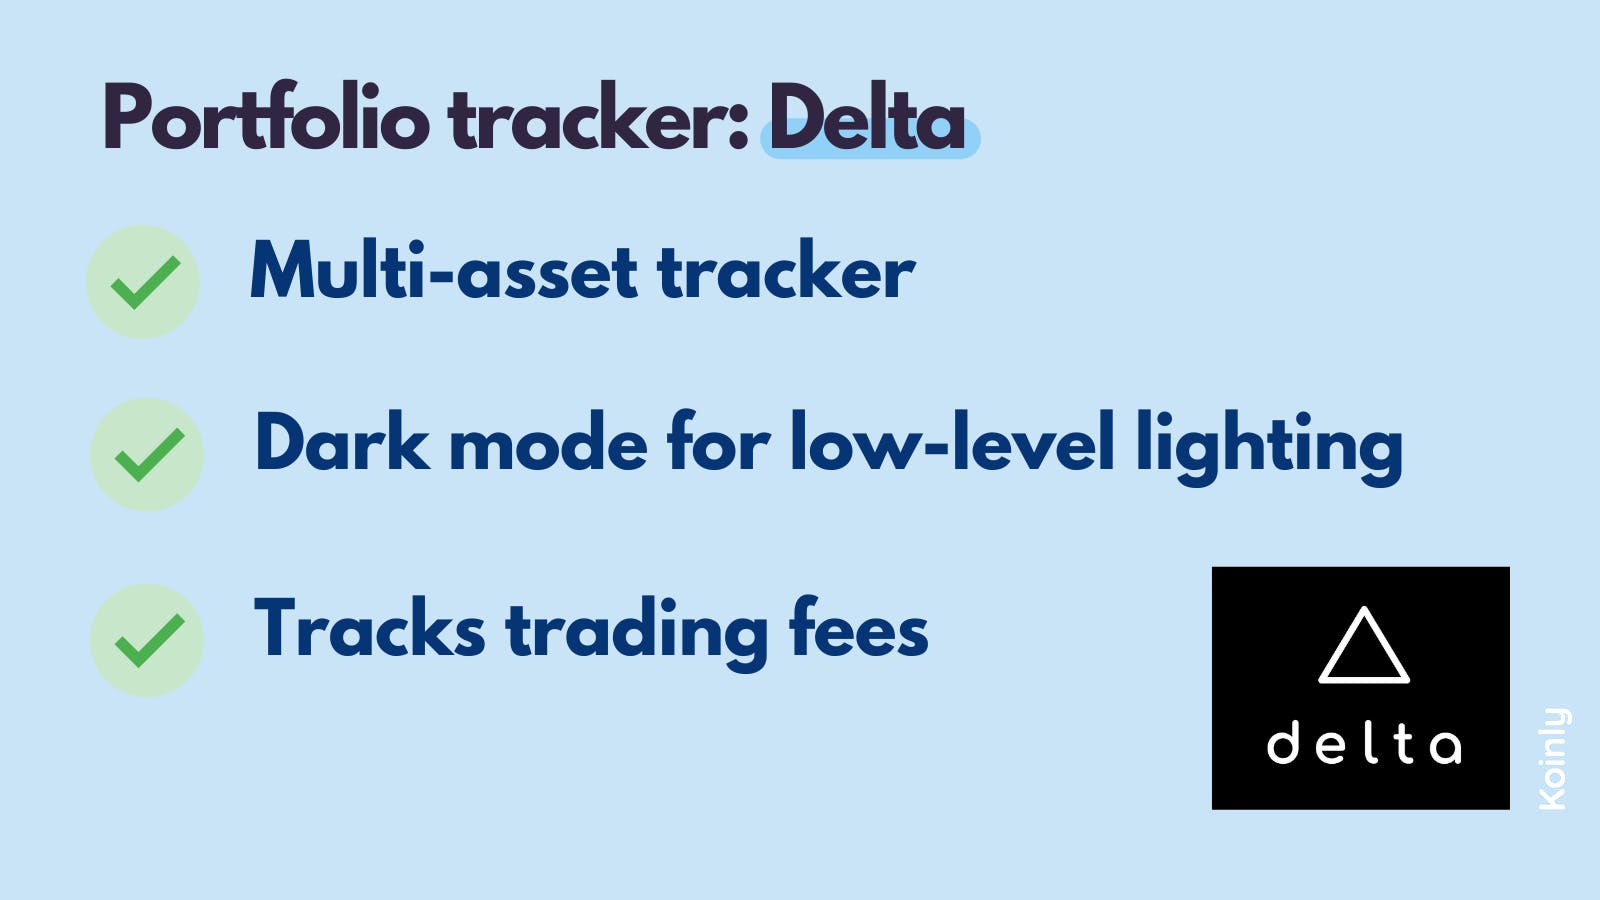 Delta features